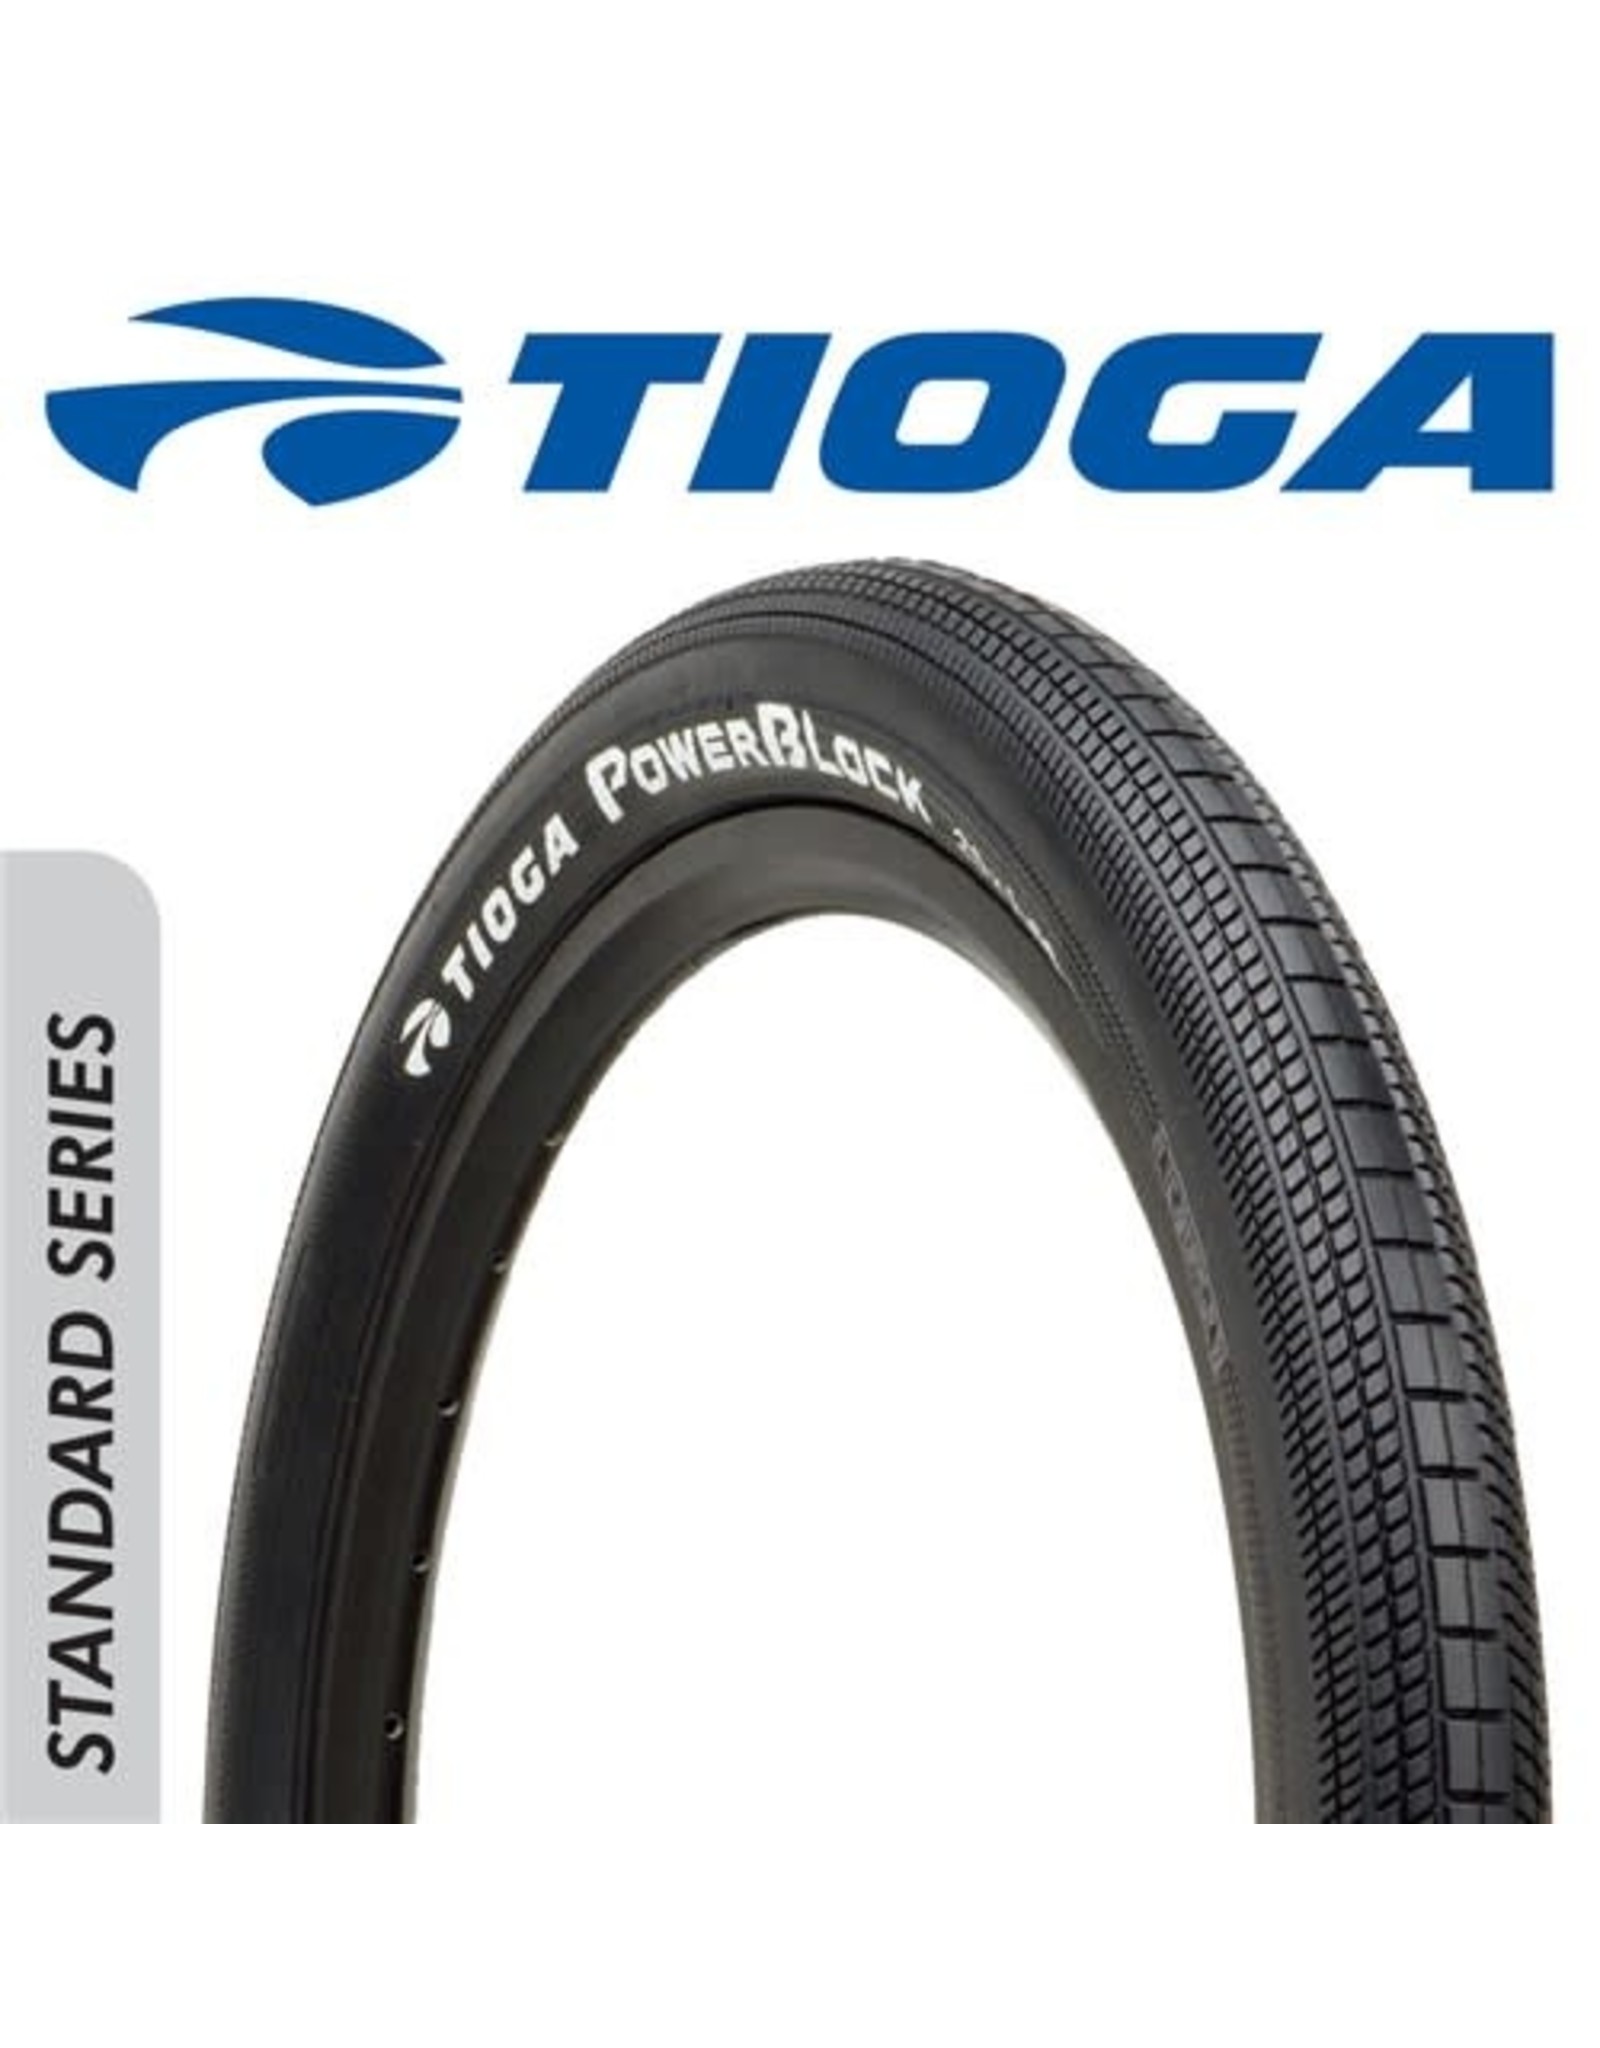 TIOGA TIOGA POWERBLOCK 20 X 1-1/8” TYRE